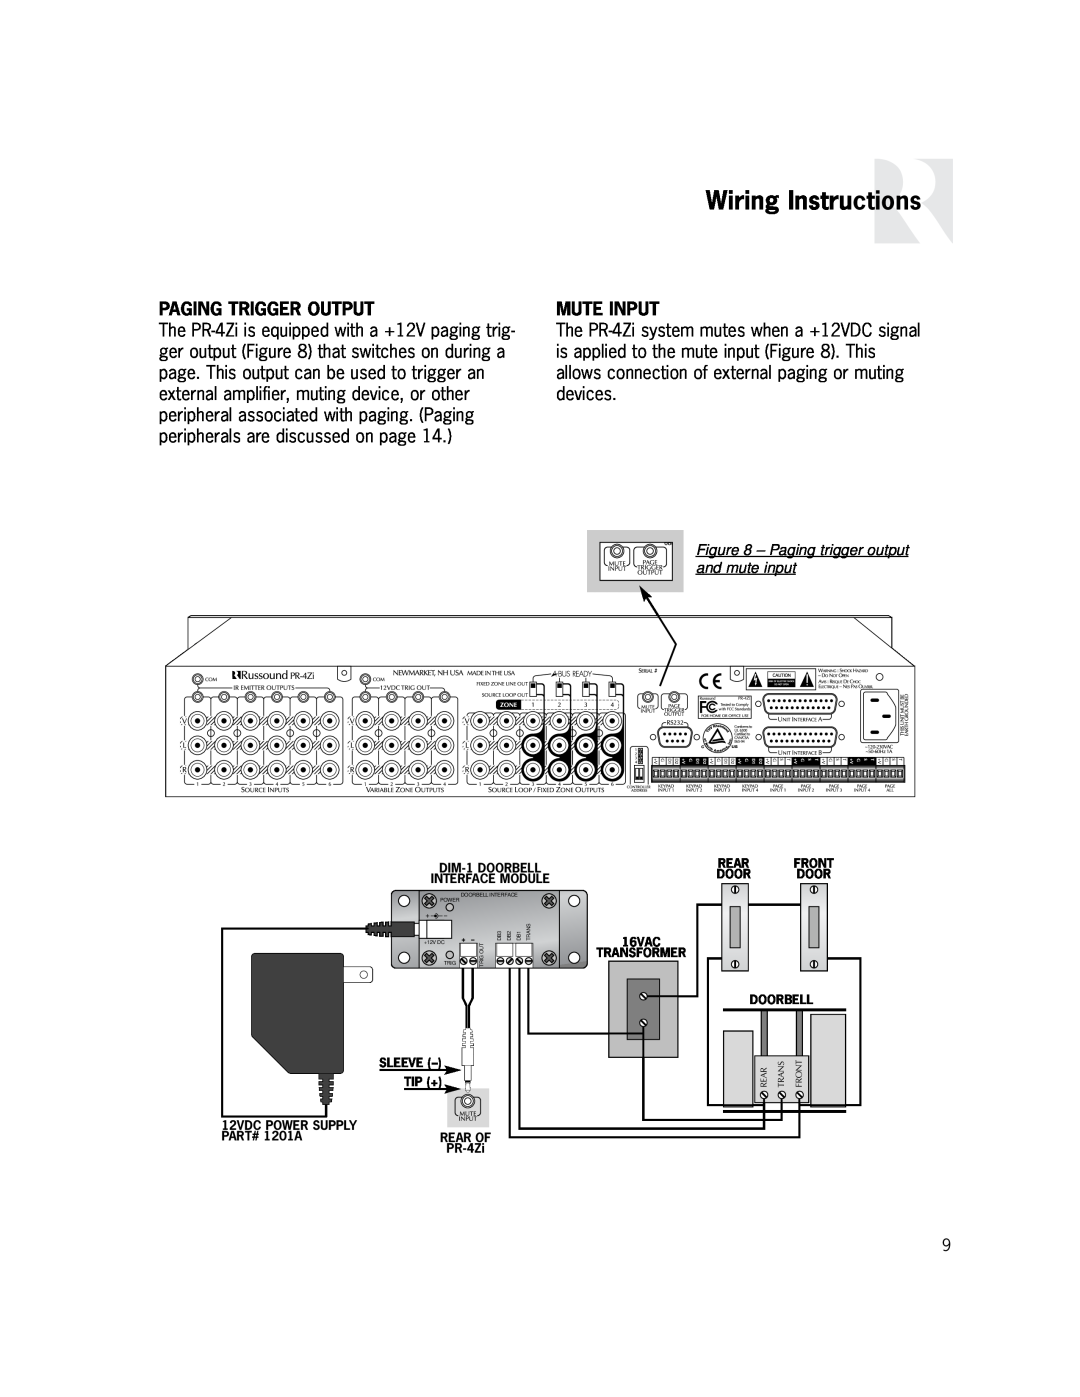 Russound PR-4Zi Wiring Instructions, Paging Trigger Output, Mute Input, Paging trigger output and mute input 